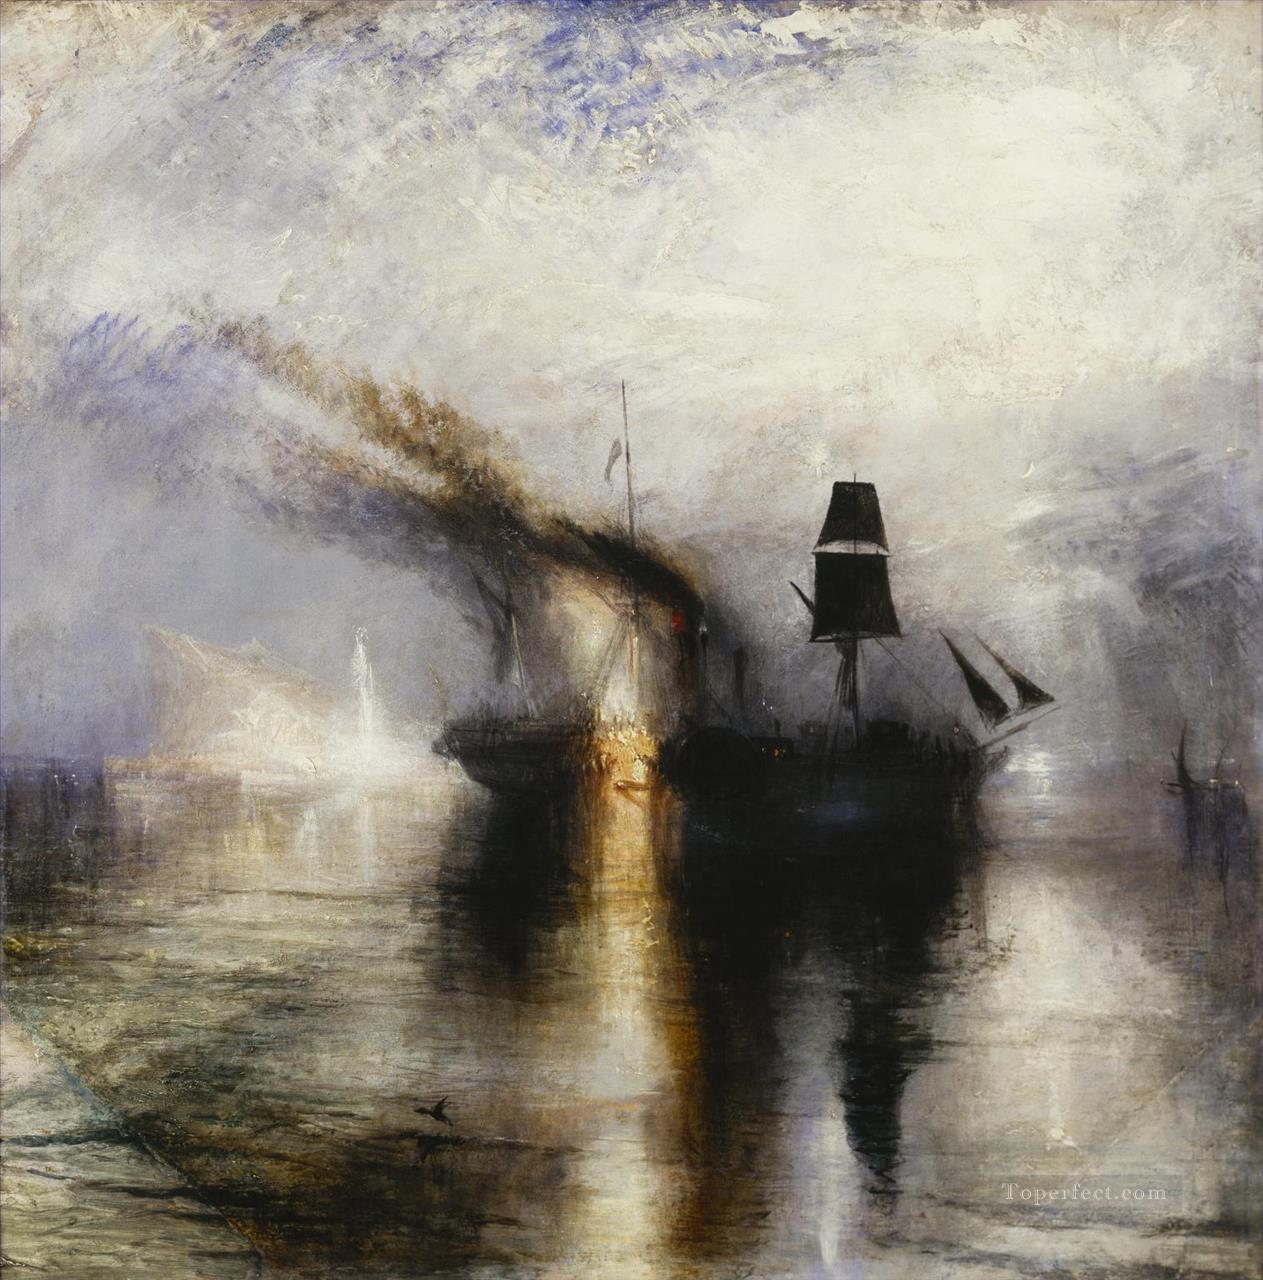 Snowstorm Peace Burial at Sea 1842 Romantic Turner Oil Paintings